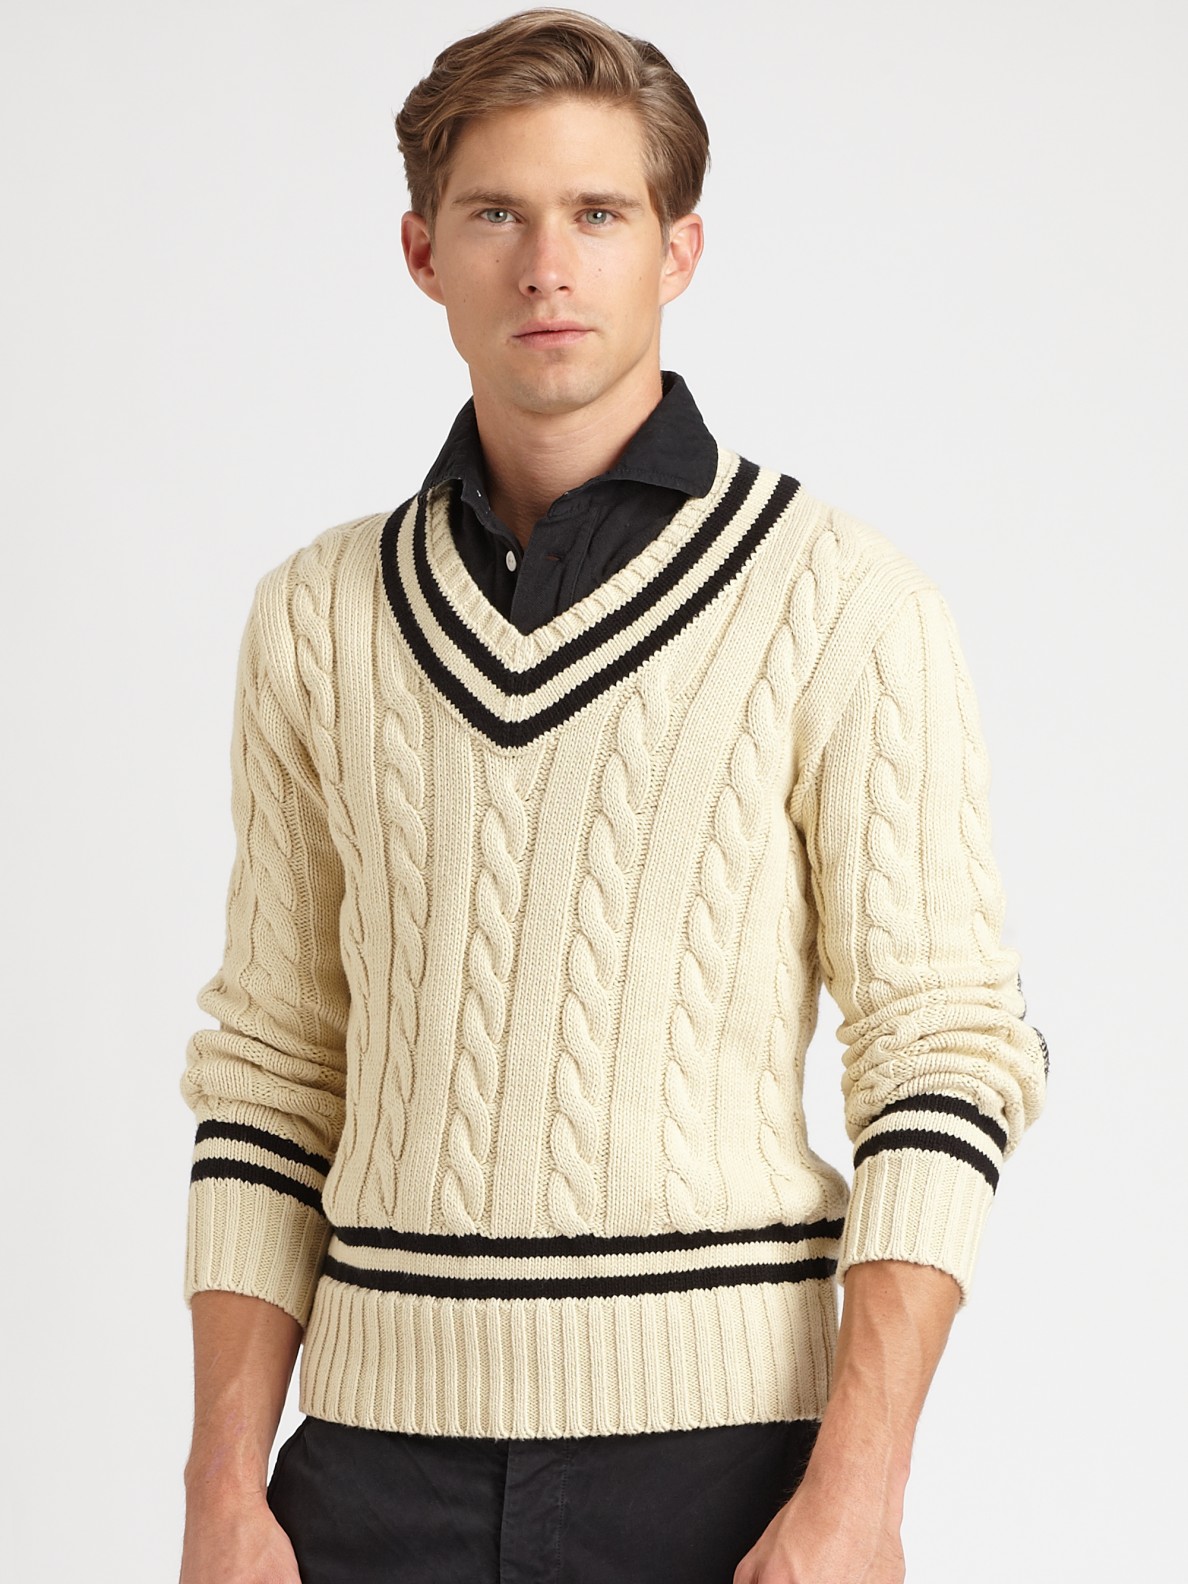 Total 59+ imagen polo ralph lauren cable knit cricket sweater - Viaterra.mx